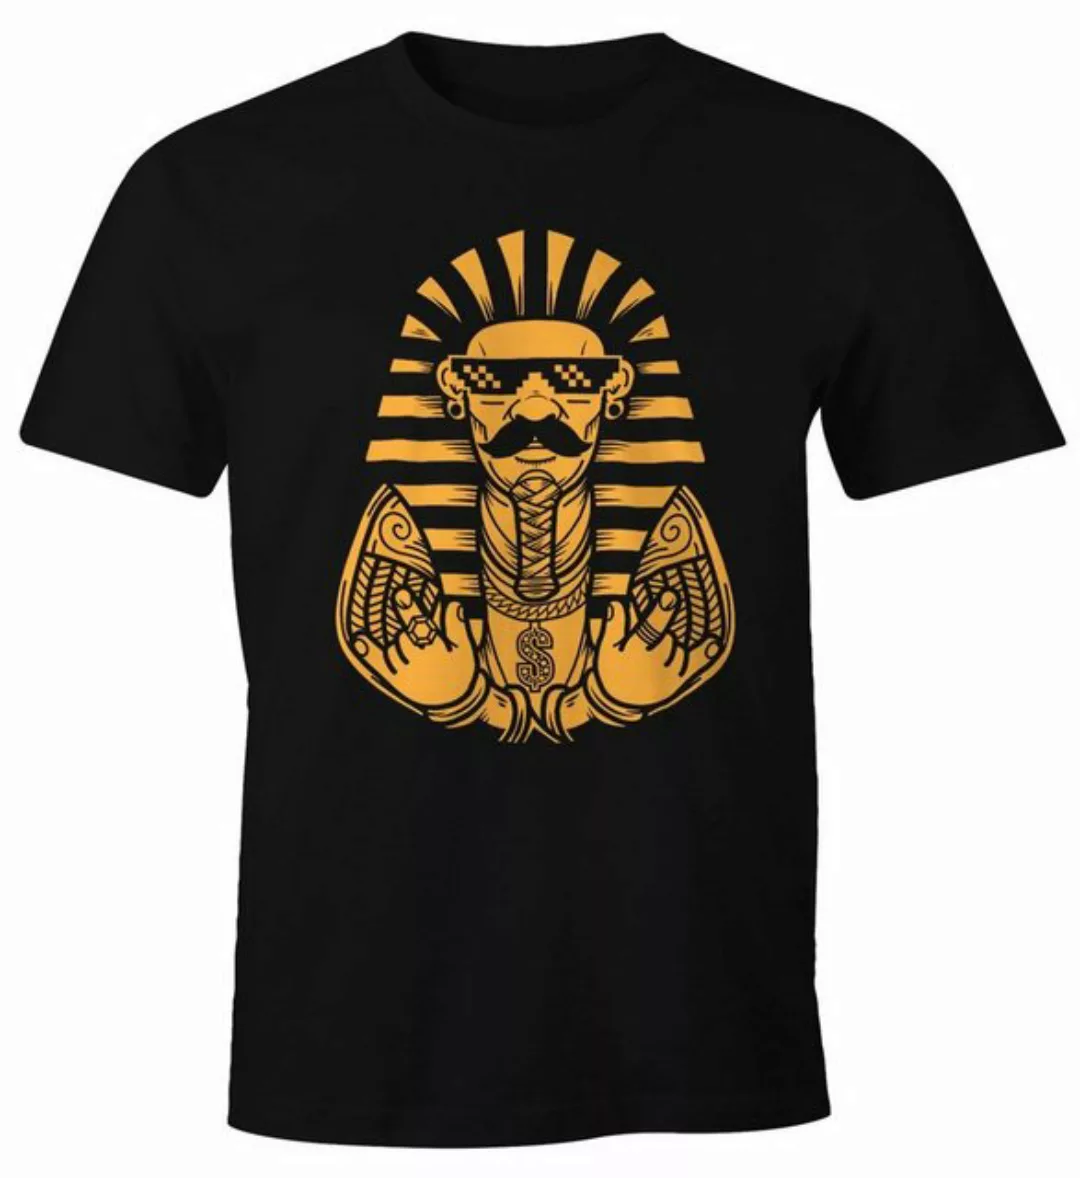 MoonWorks Print-Shirt Herren T-Shirt King Thug Gangster Life Fun-Shirt mit günstig online kaufen